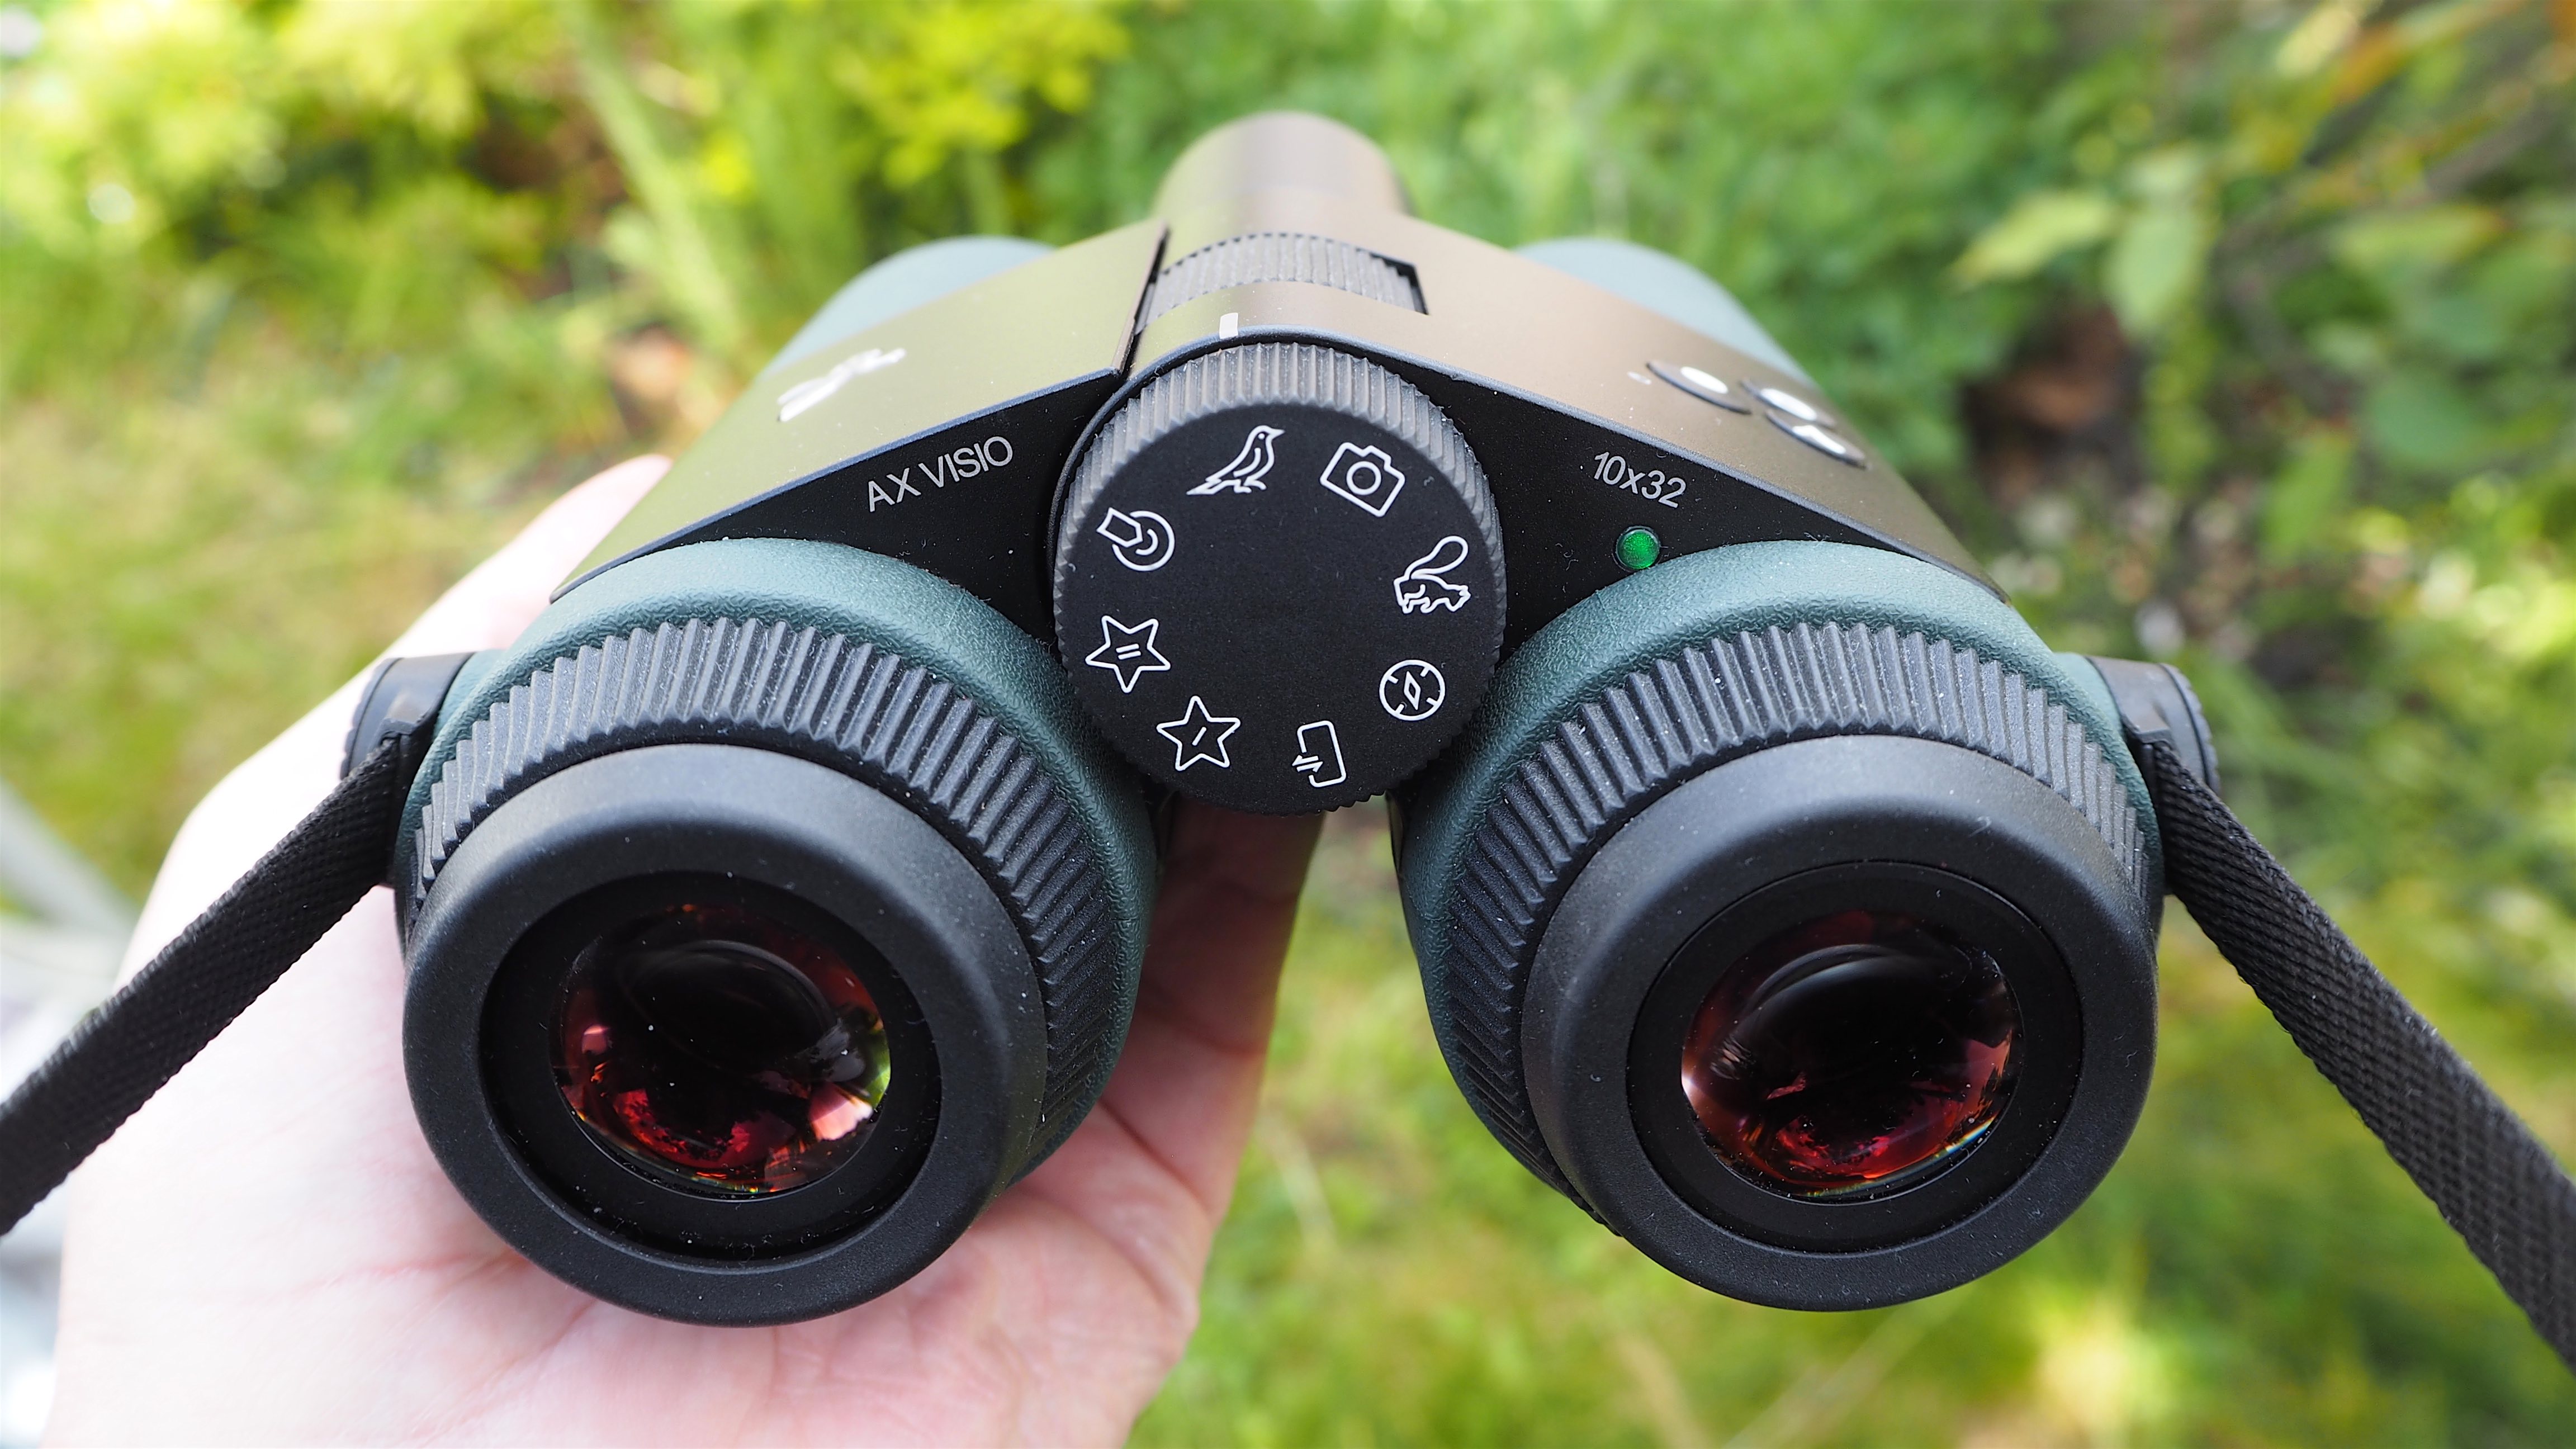 Swarovski AX Visio 10x32 binoculars close-up of the controls